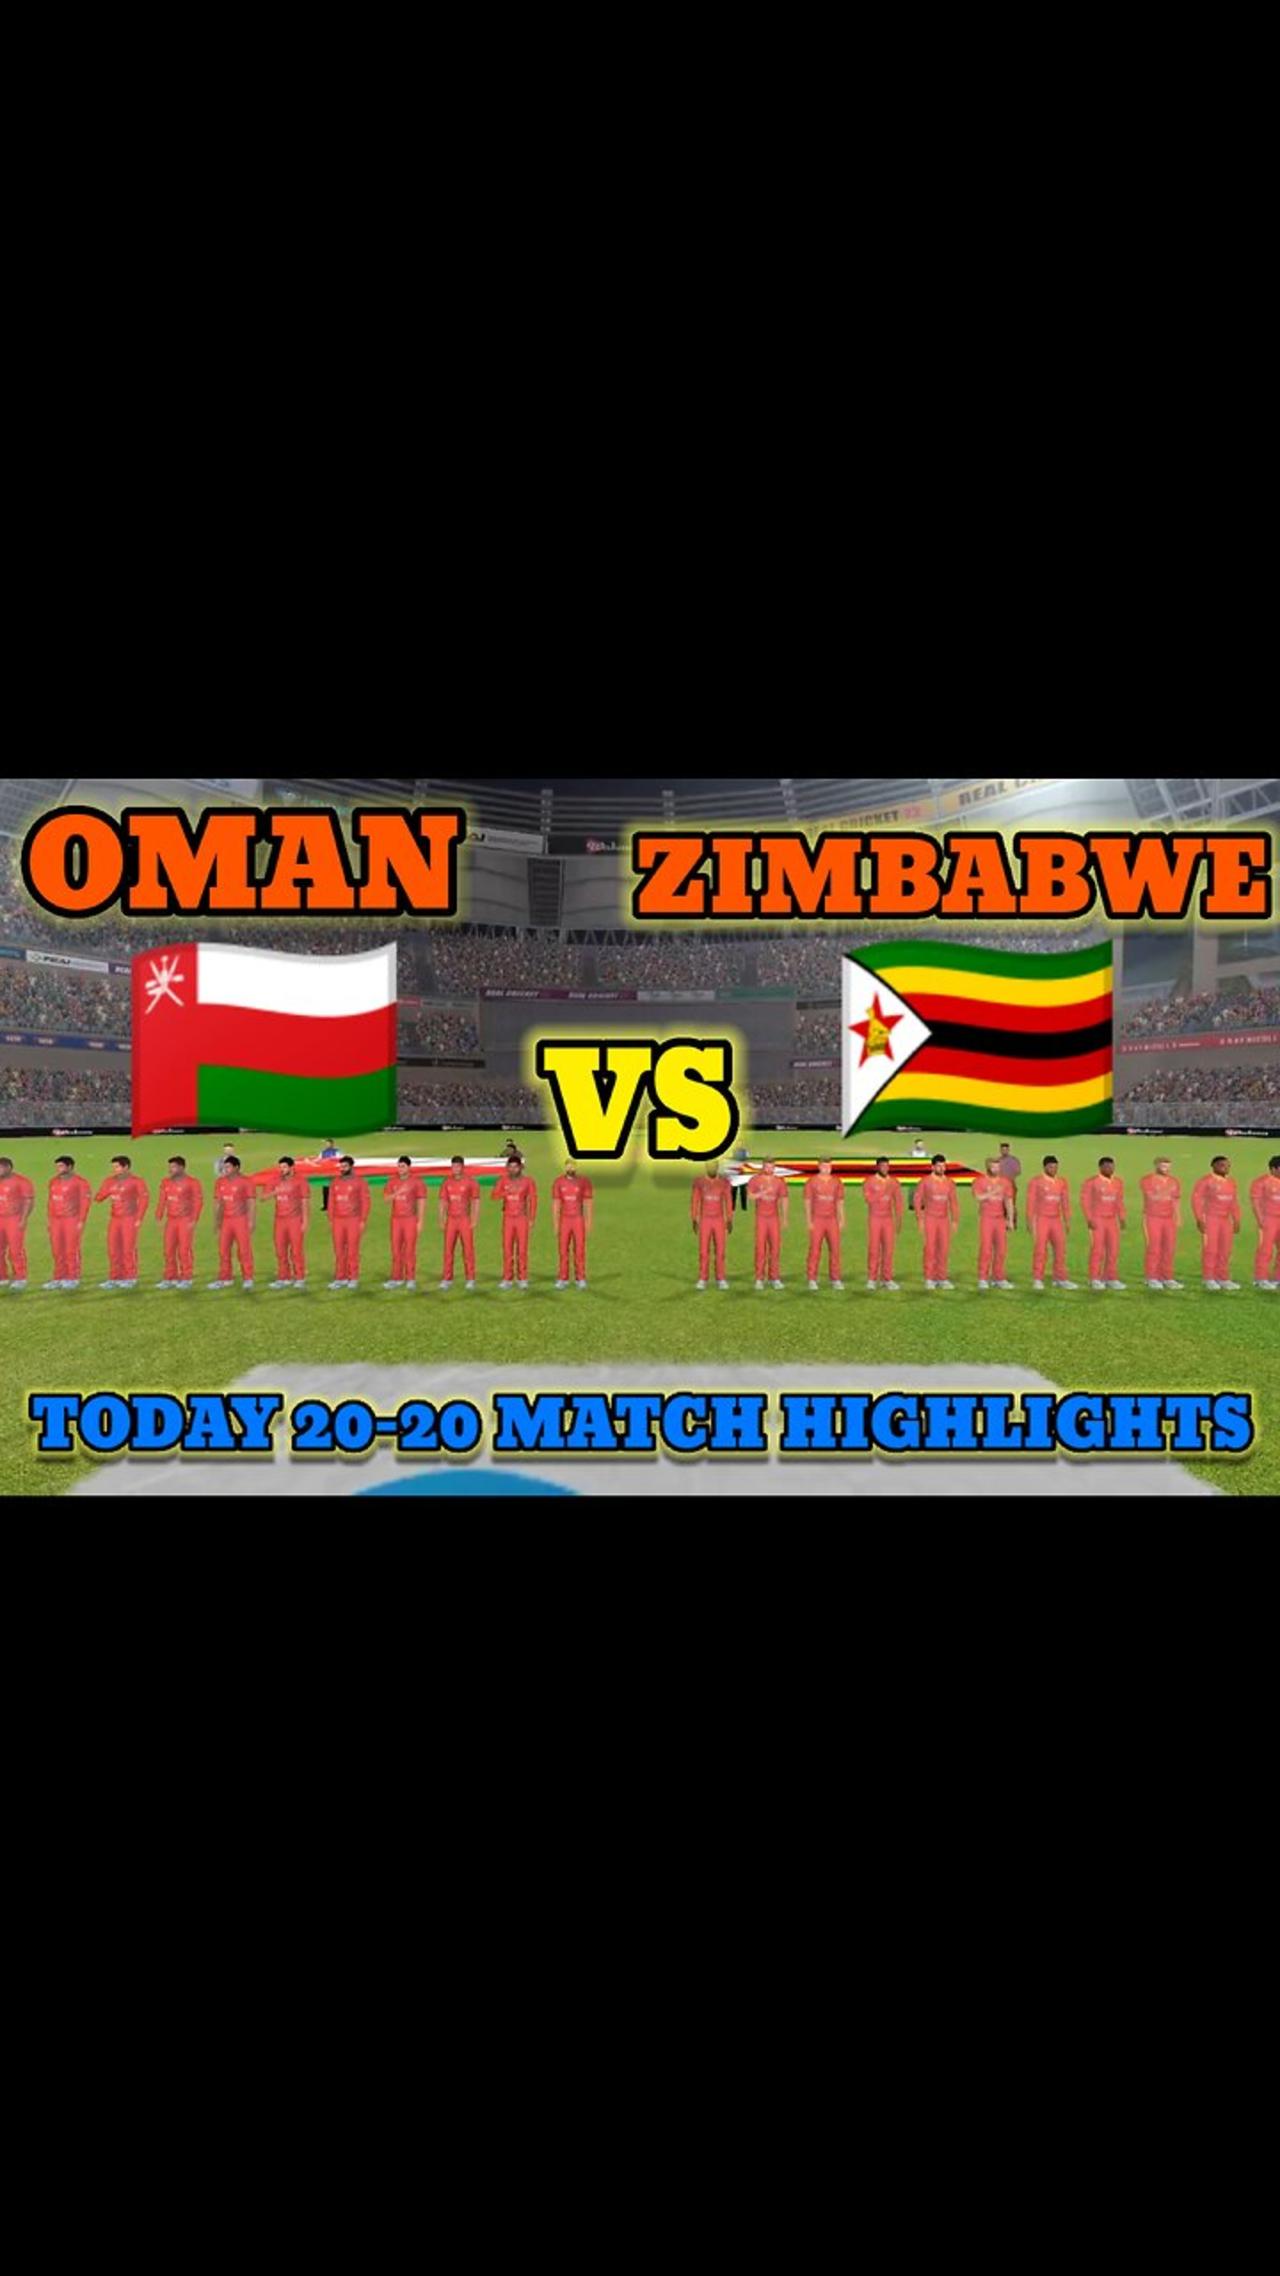 Oman Vs Zimbabwe | 20-20 | Match Highlights Today #rumble #cricket